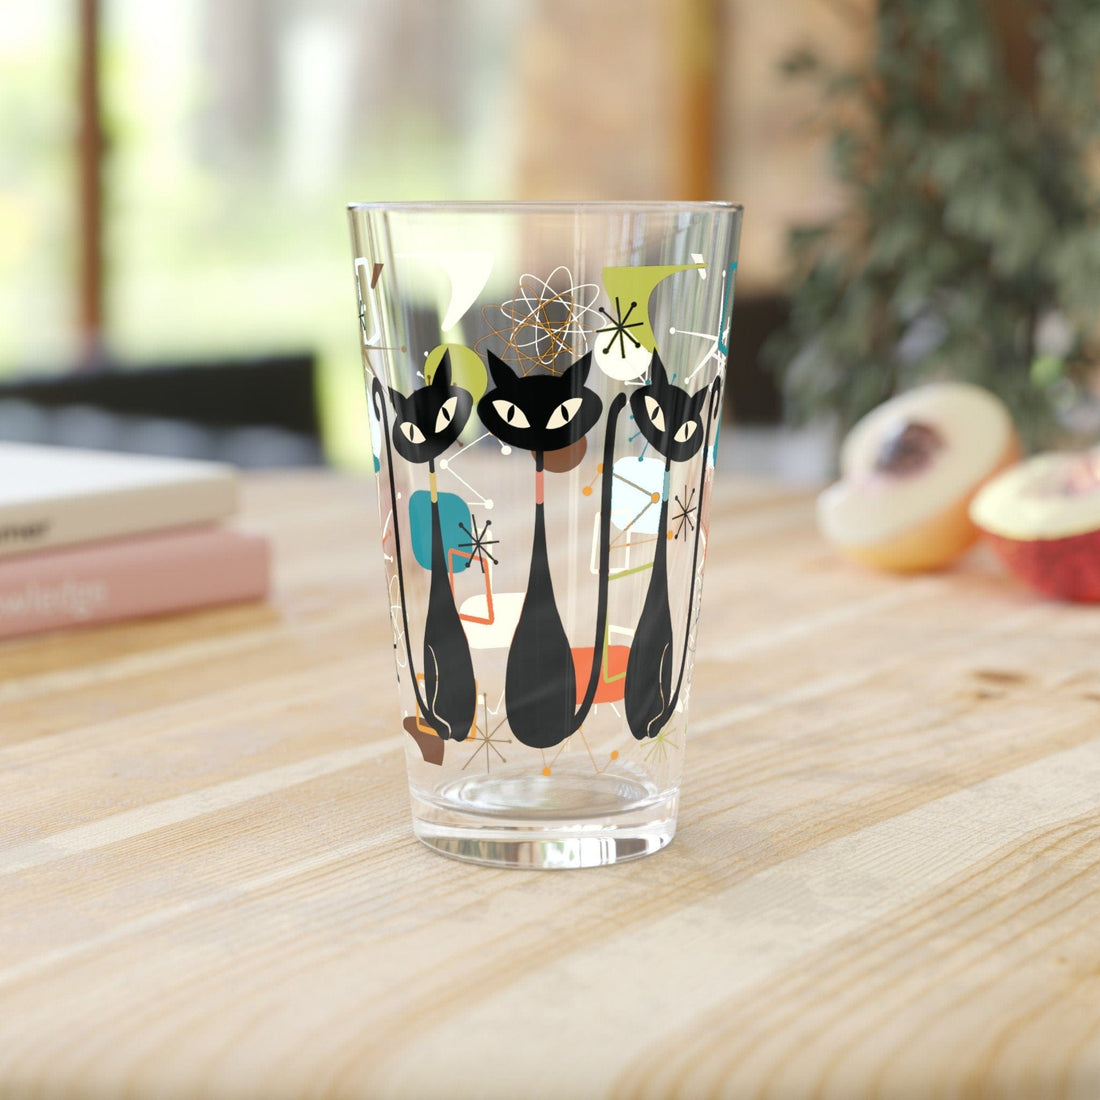 Kate McEnroe New York Atomic Kitschy Black Cat Pint Glass, 16oz Mid Century Modern Retro Beer Glass, MCM Beer Glassware Gifts, Party Drinkware, Cocktail GlassBeer Glasses19544781790628725125